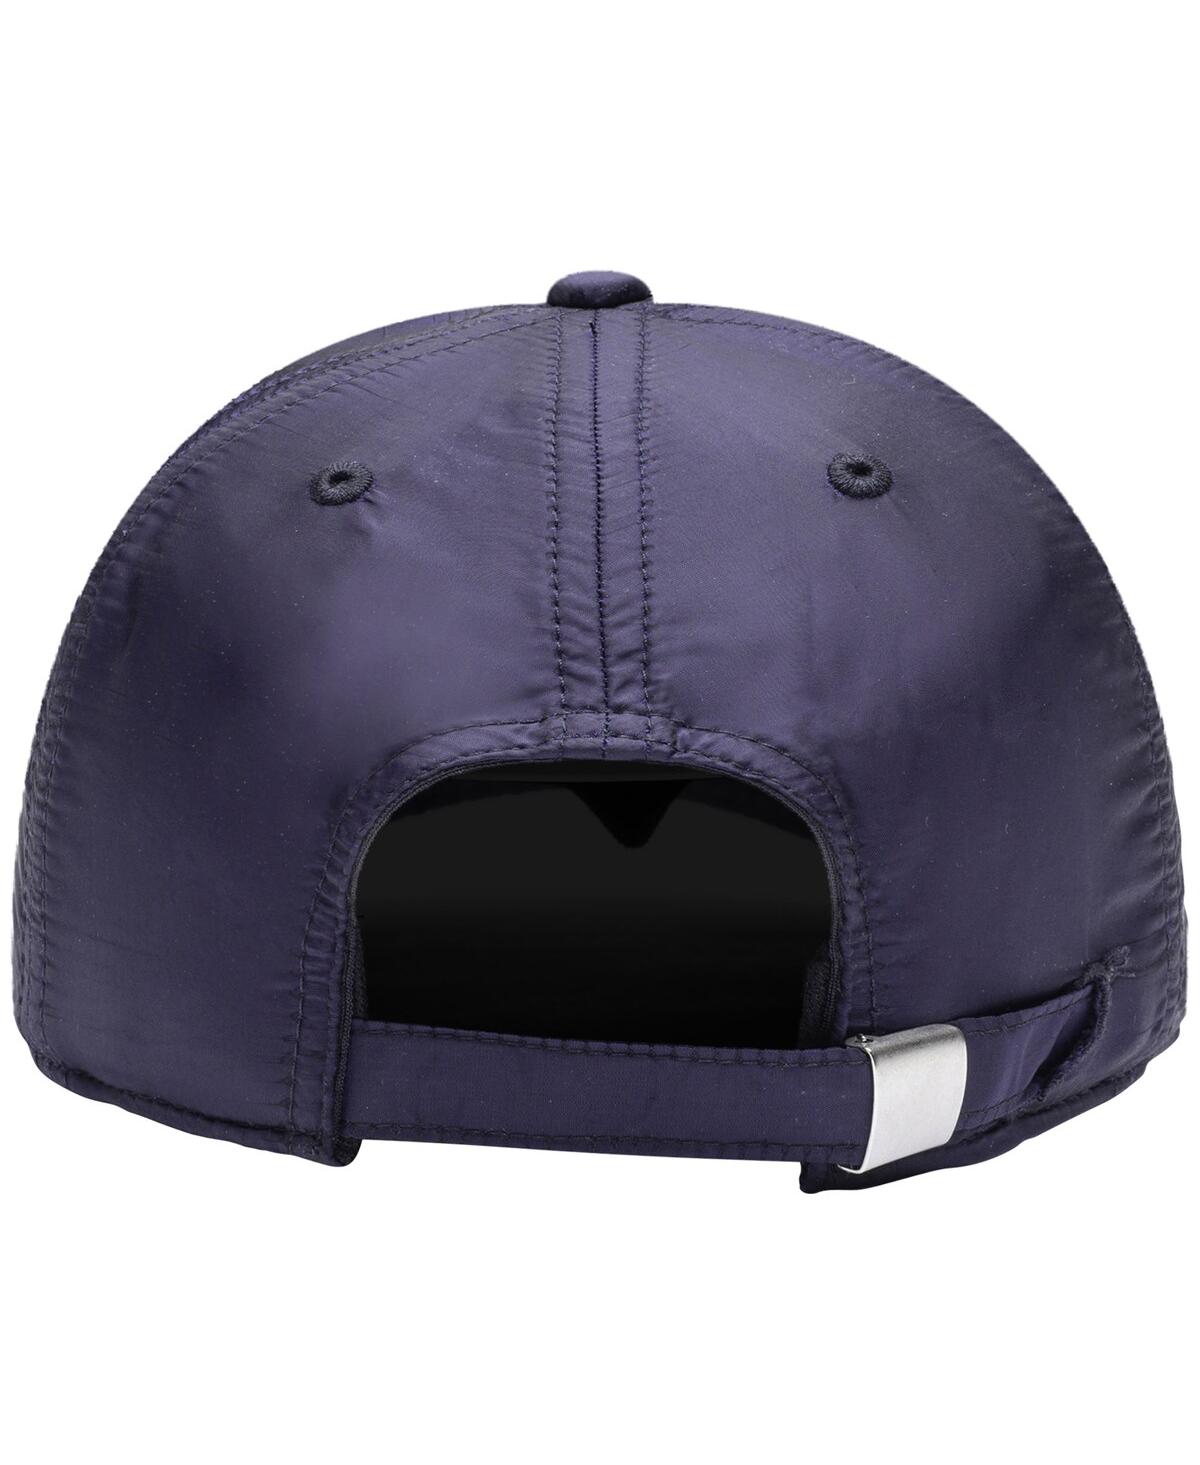 Shop Fan Ink Men's Navy Club America Liquid Adjustable Hat